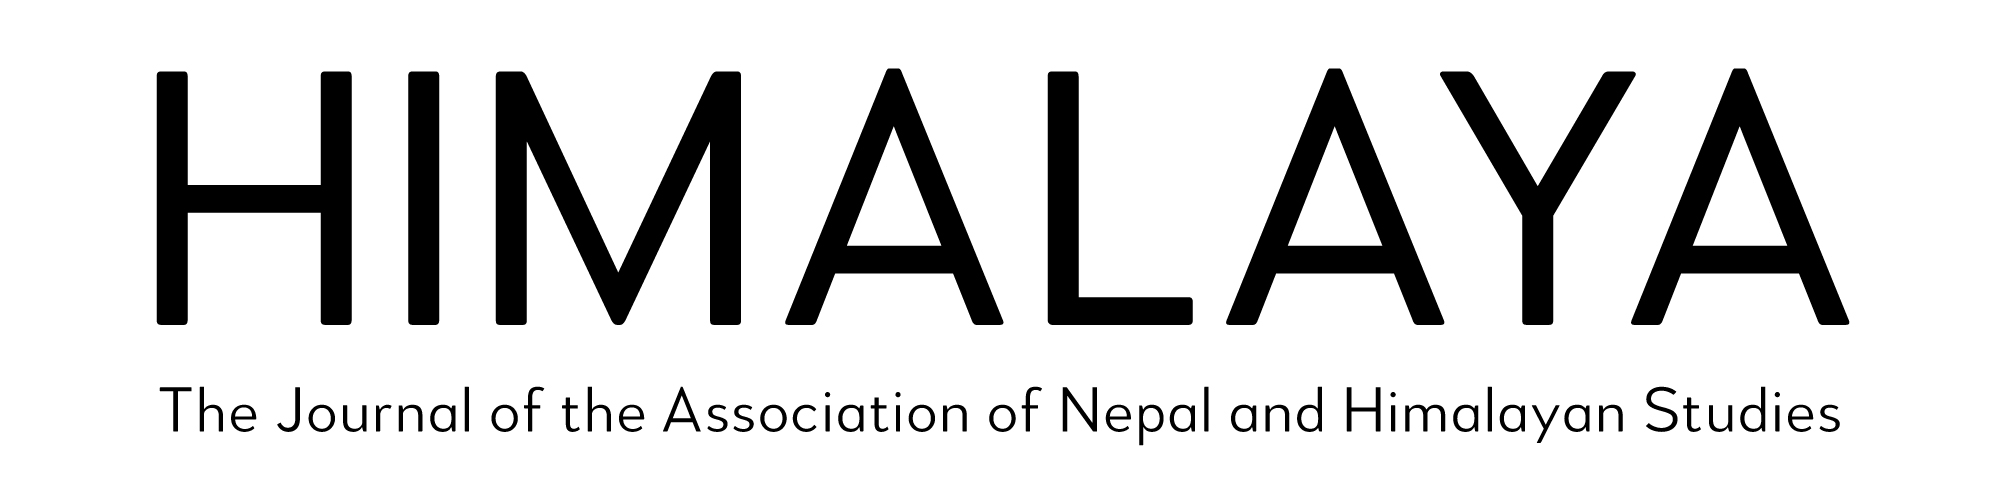 HIMALAYA Journal Logo